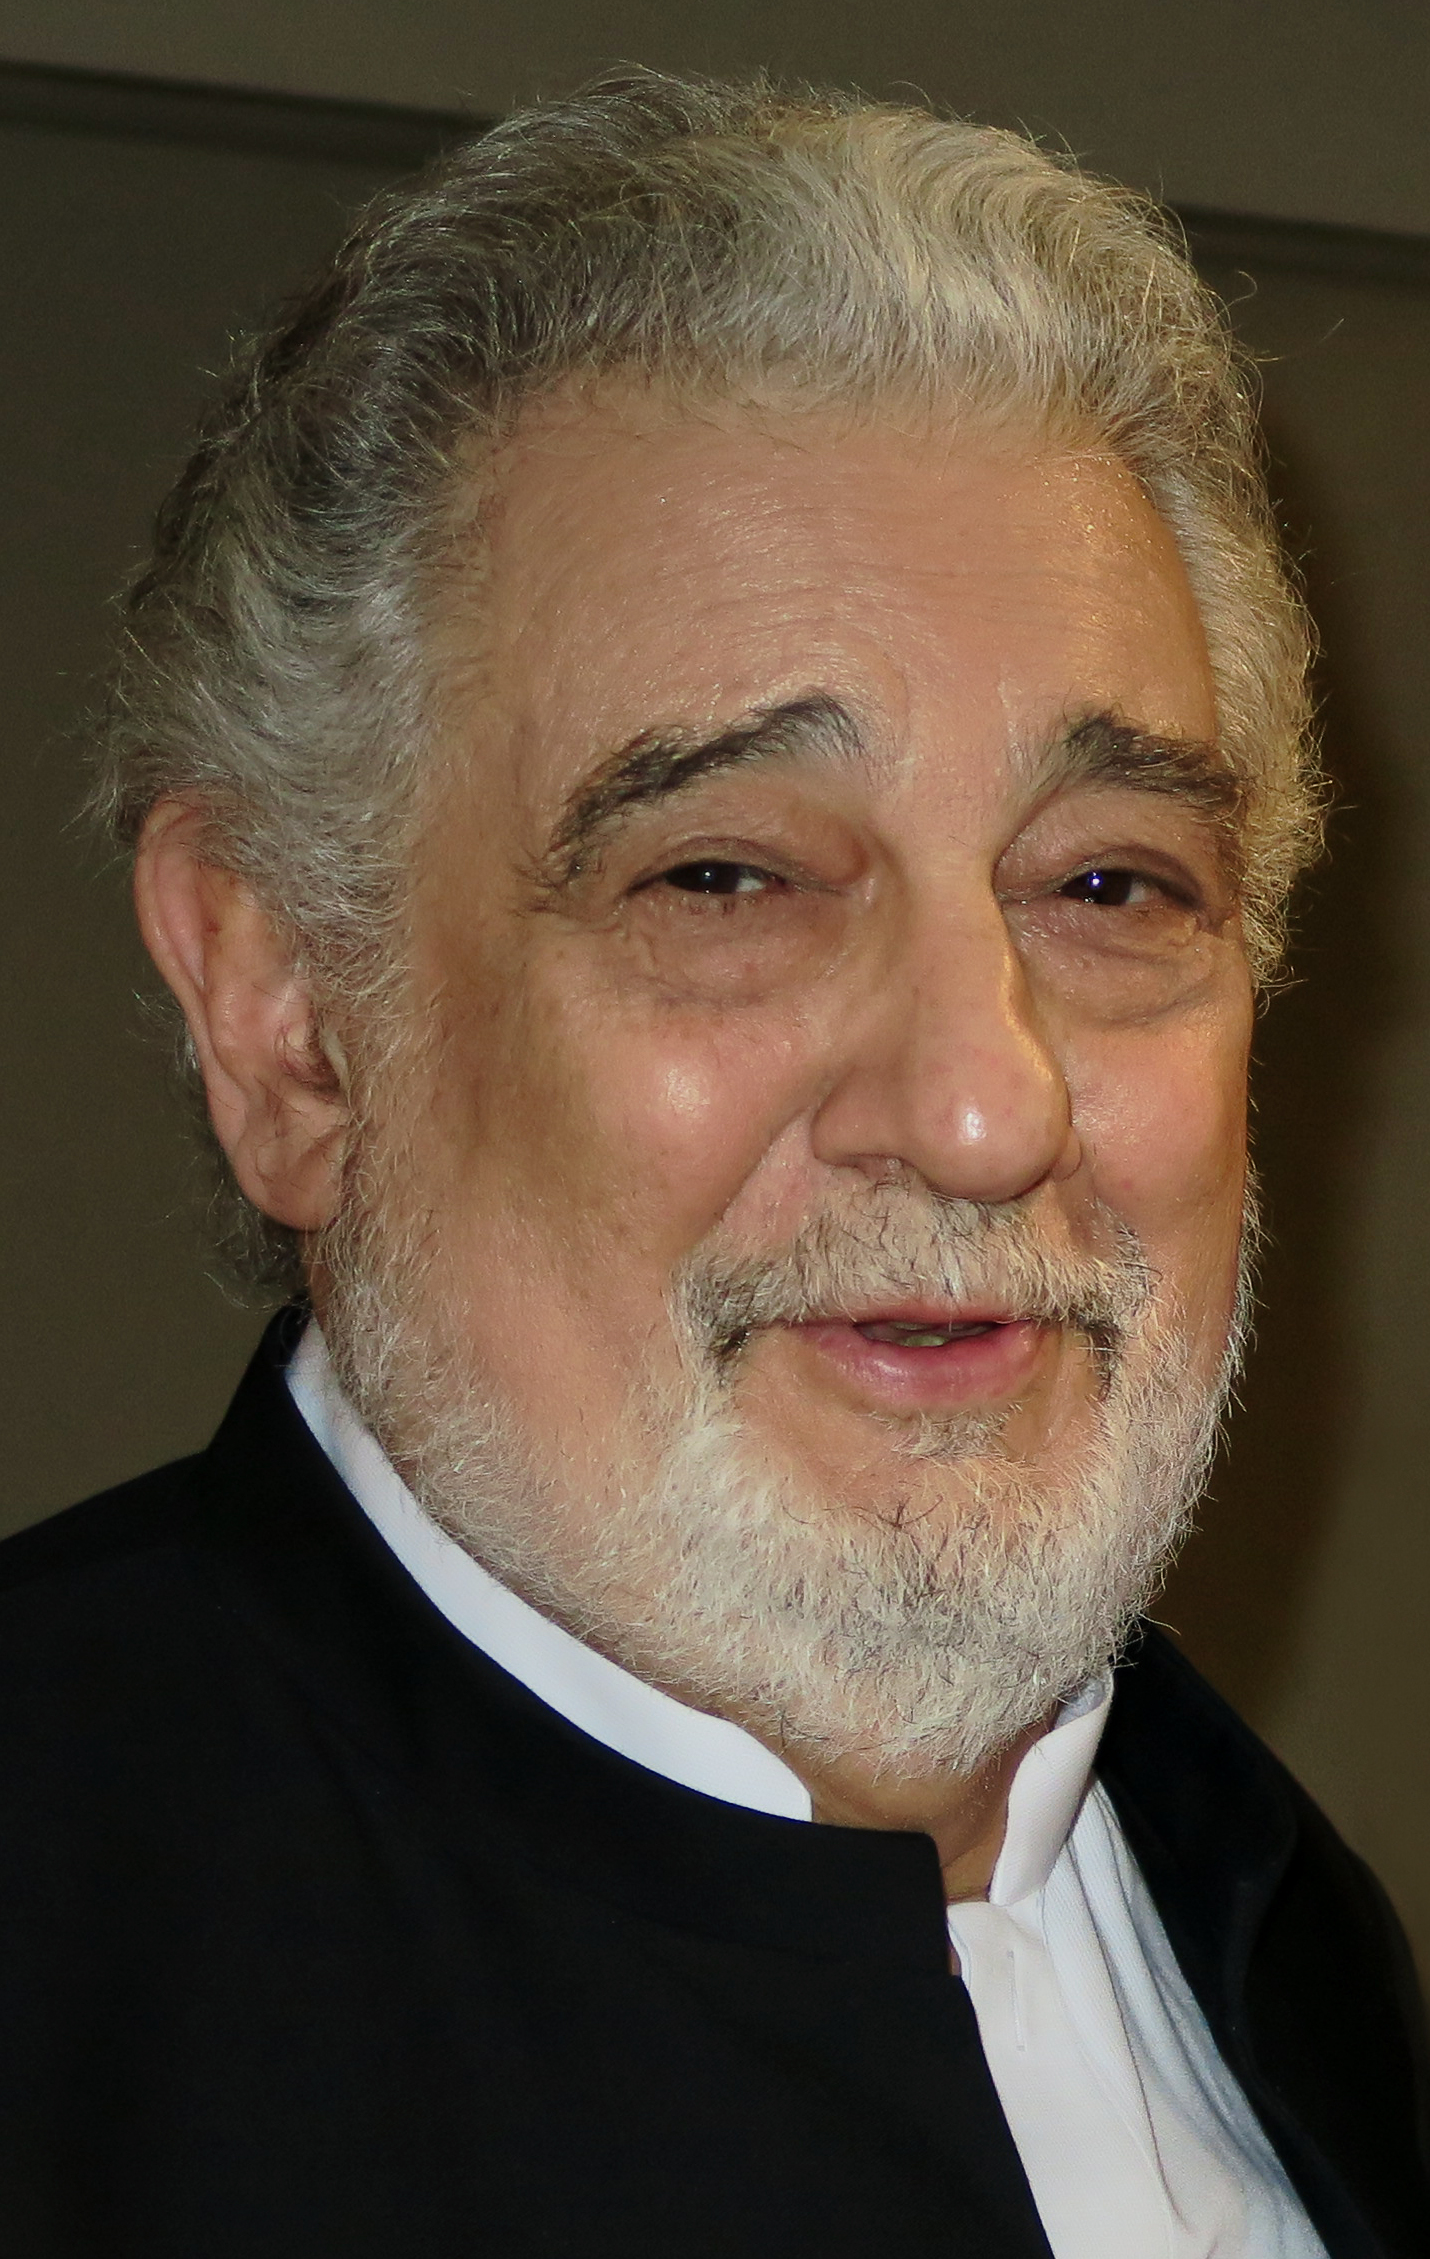 UPDATE 1-LA Opera to investigate sexual misconduct accusations against Placido Domingo